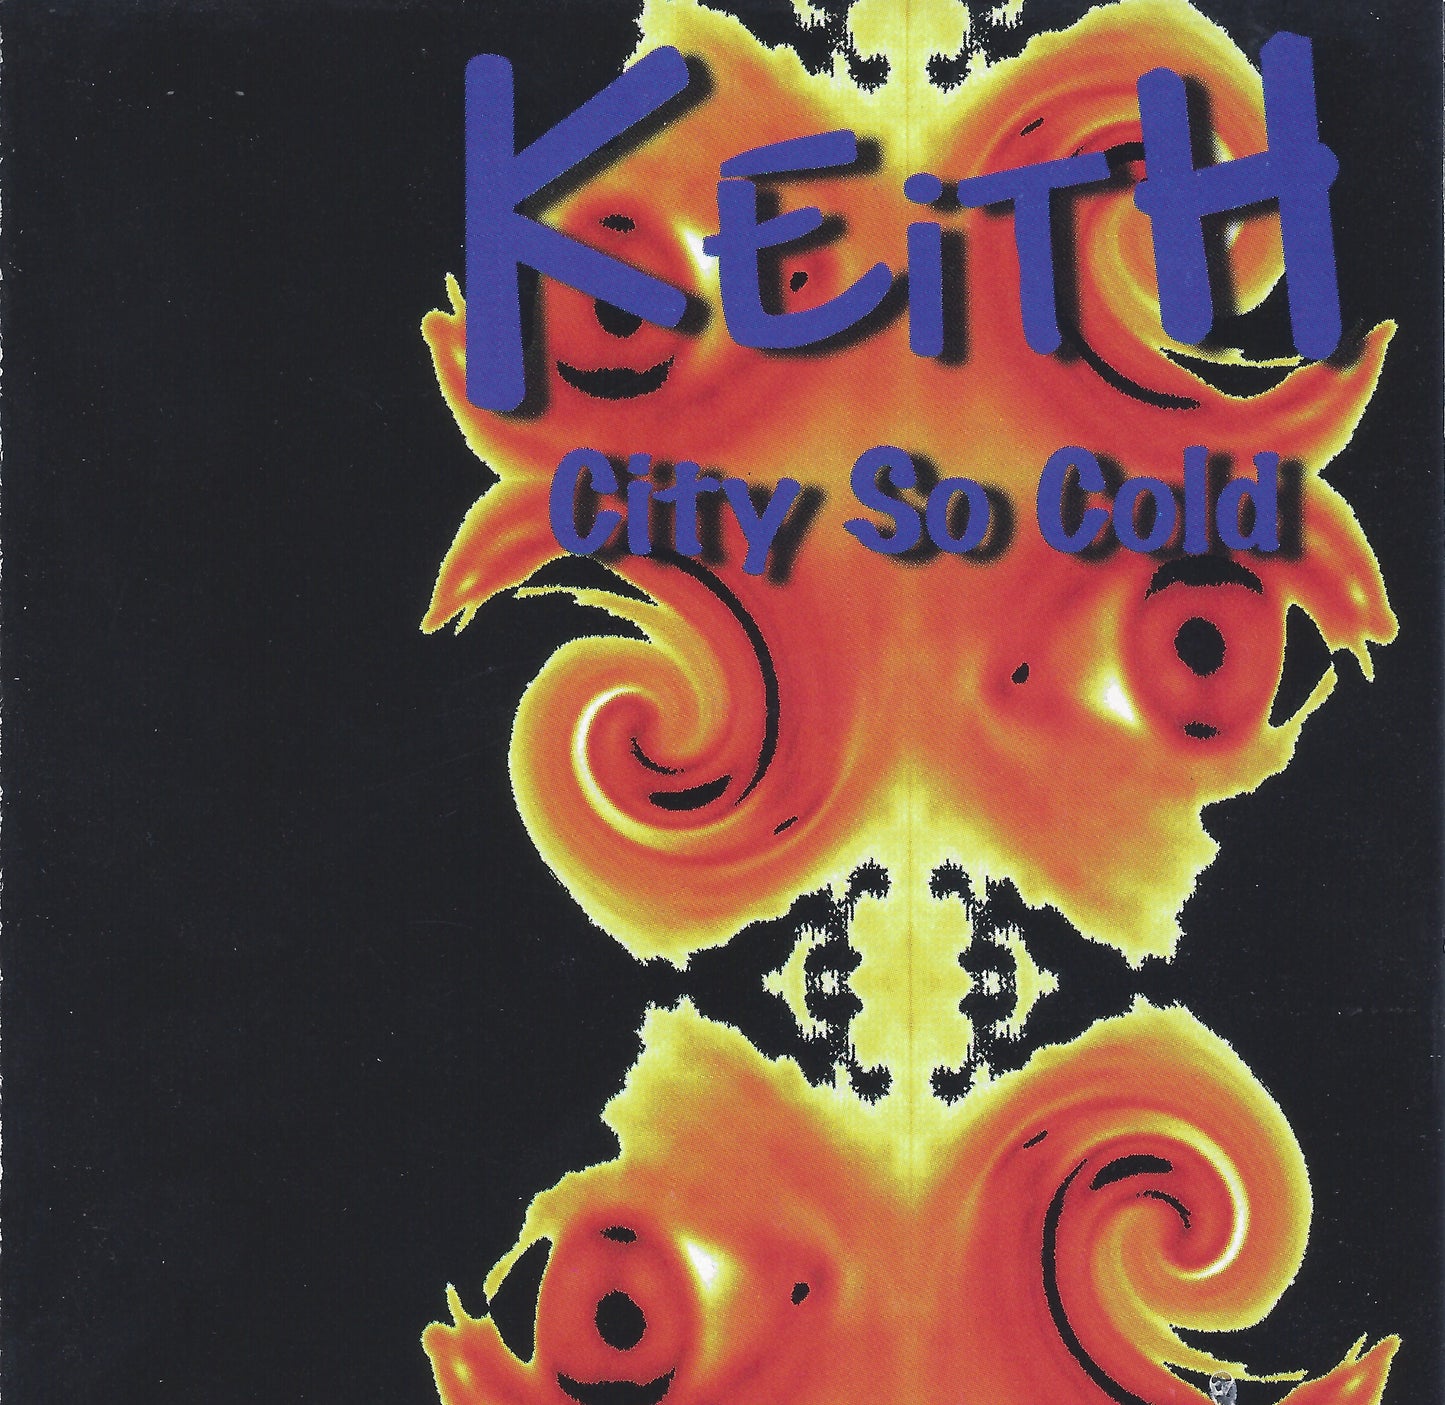 Keith Jolie - City So Cold CD